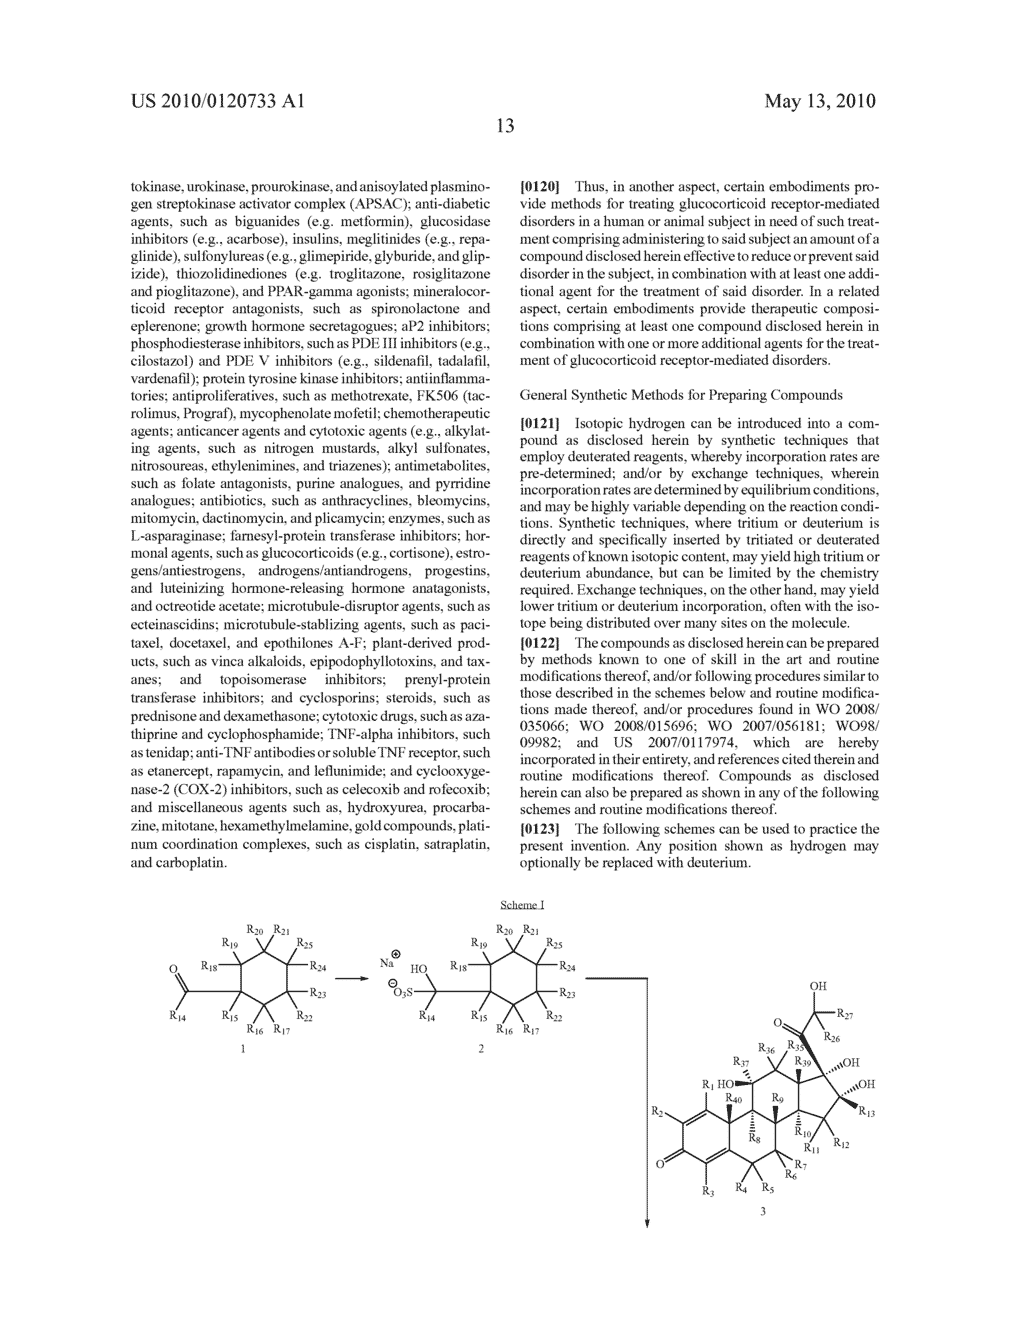 STEROID MODULATORS OF GLUCOCORTICOID RECEPTOR - diagram, schematic, and image 14